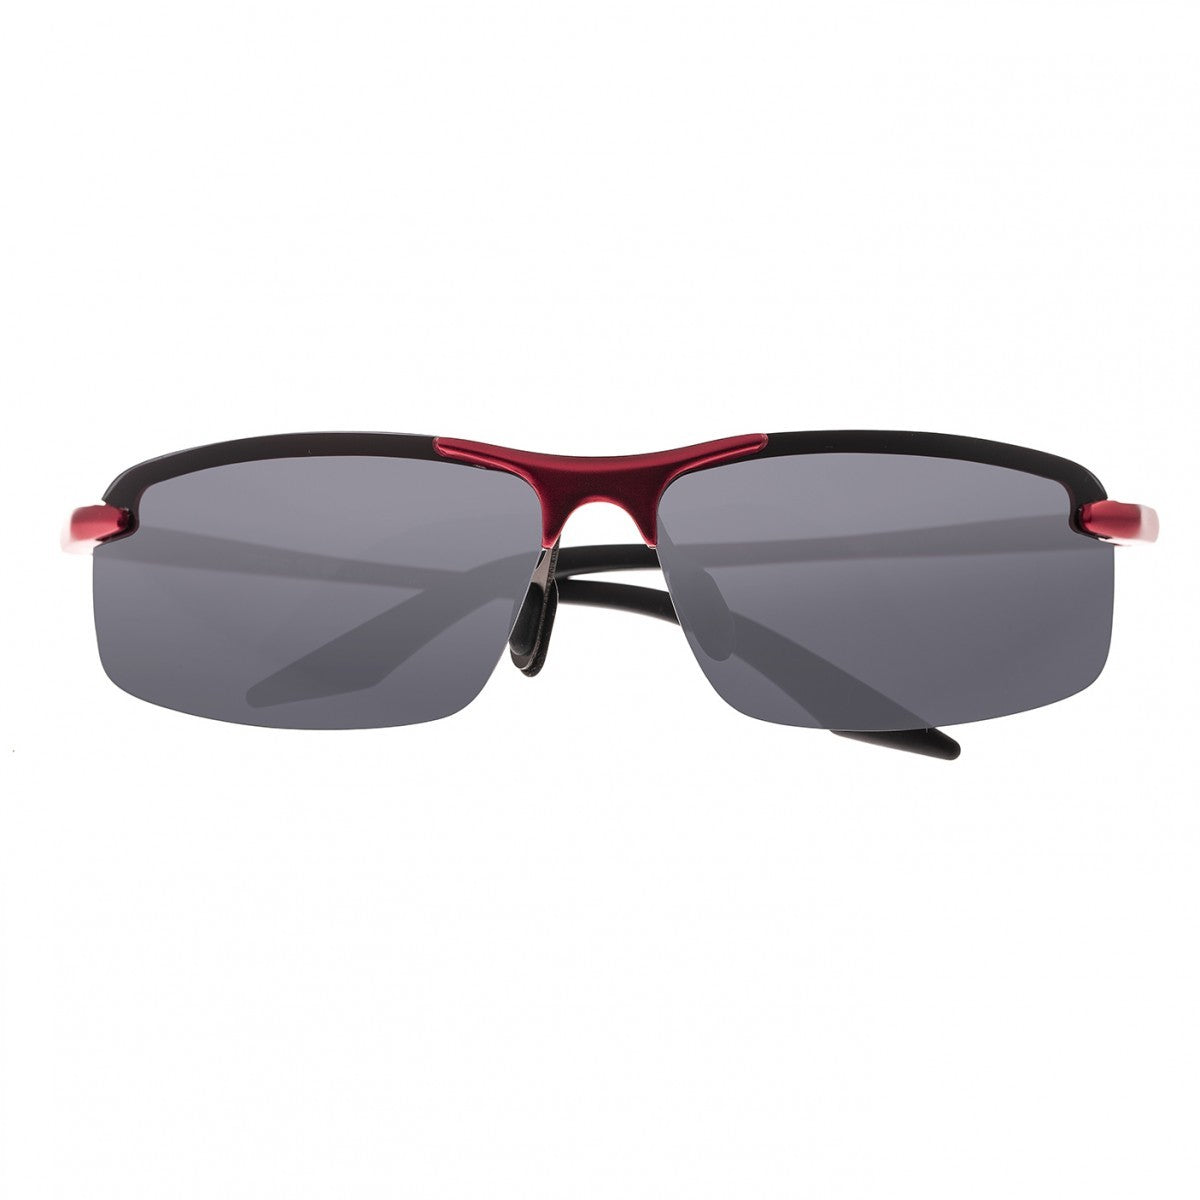 Breed Lynx Aluminium Polarized Sunglasses - Red/Black - BSG015RD